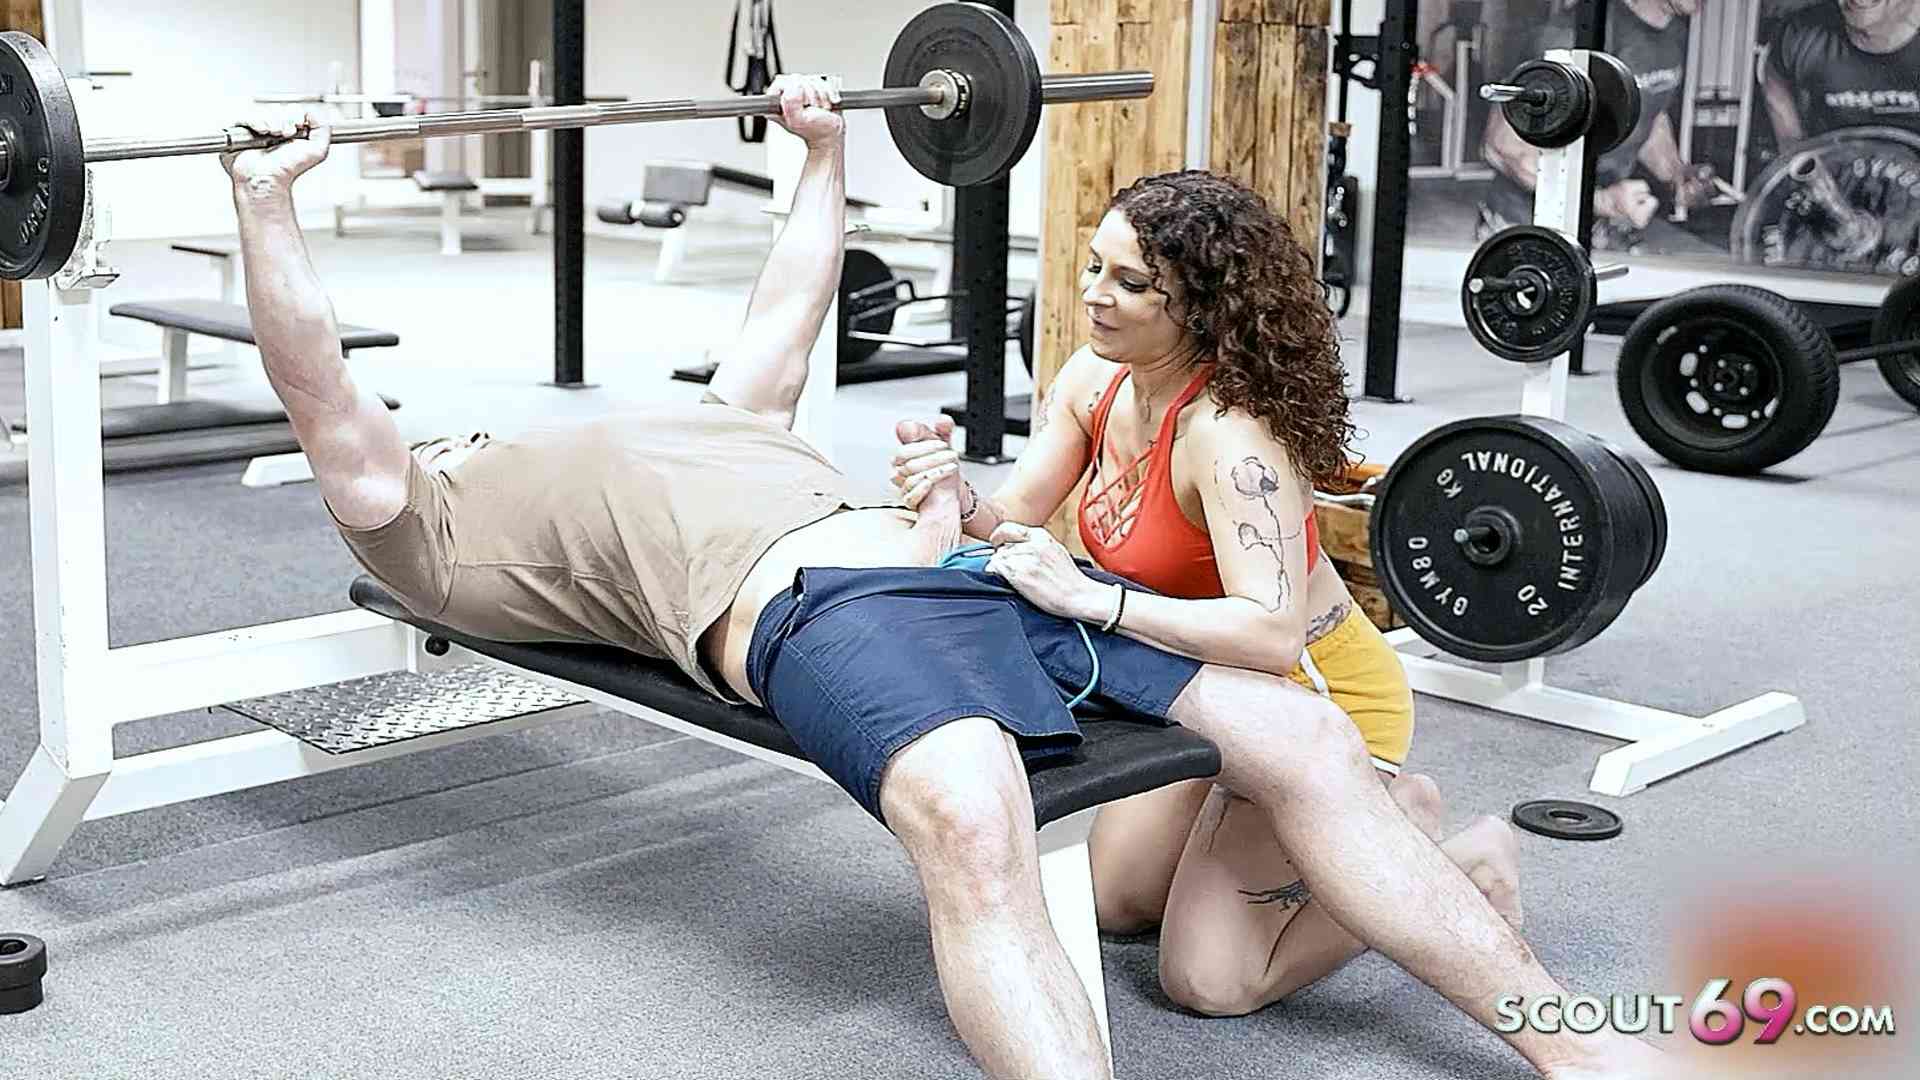 Fuck at German Gym - Big Boobs Mara Martinez suprised Stranger and let him cum inside her